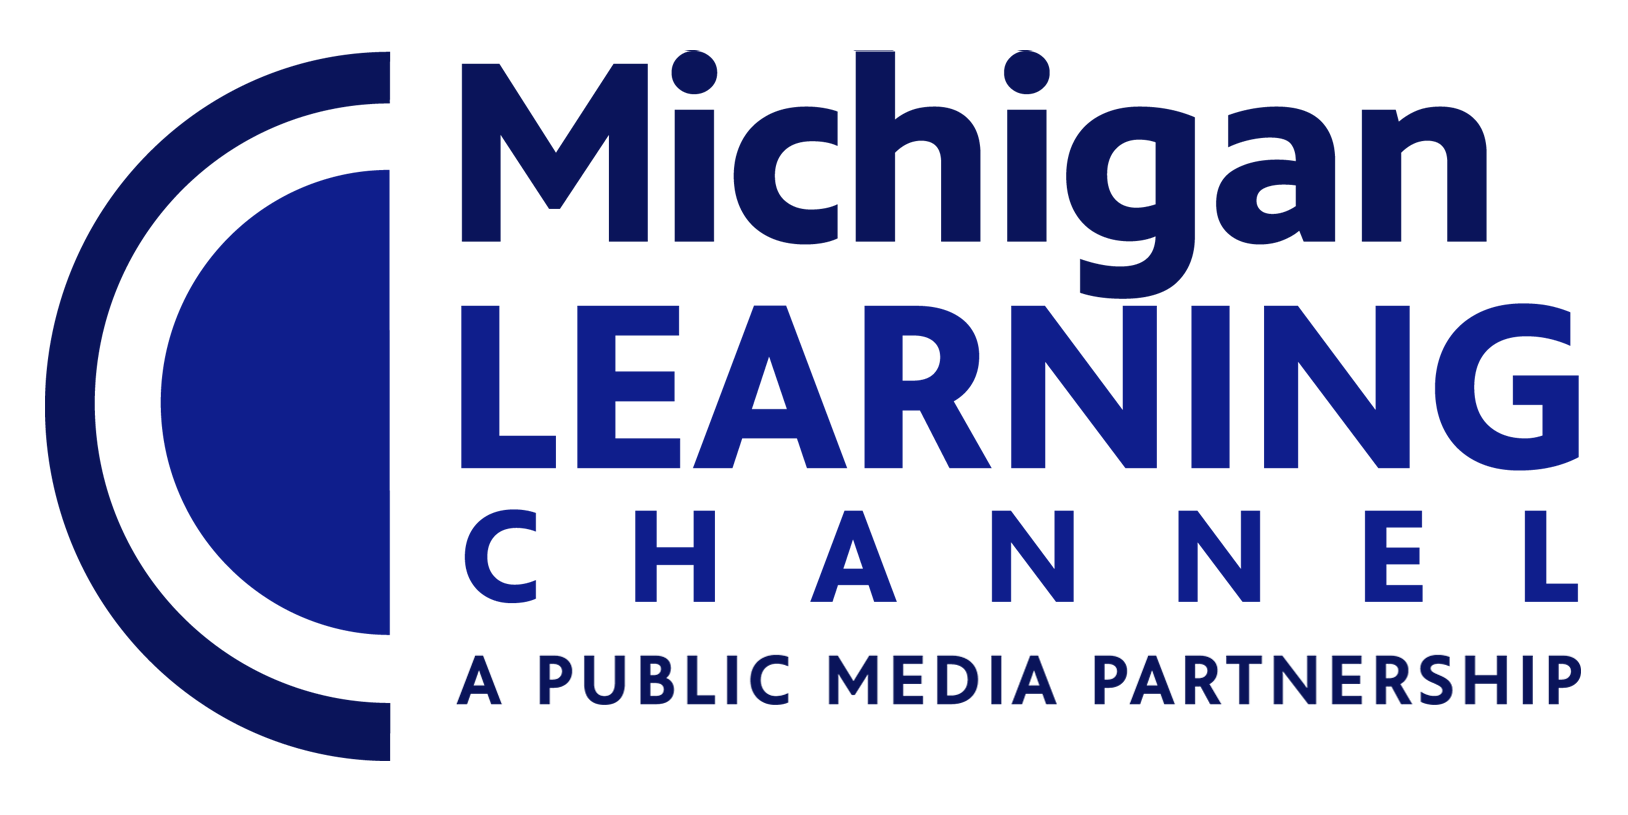 Michigan Learning Channel. A Public Media Partnership.